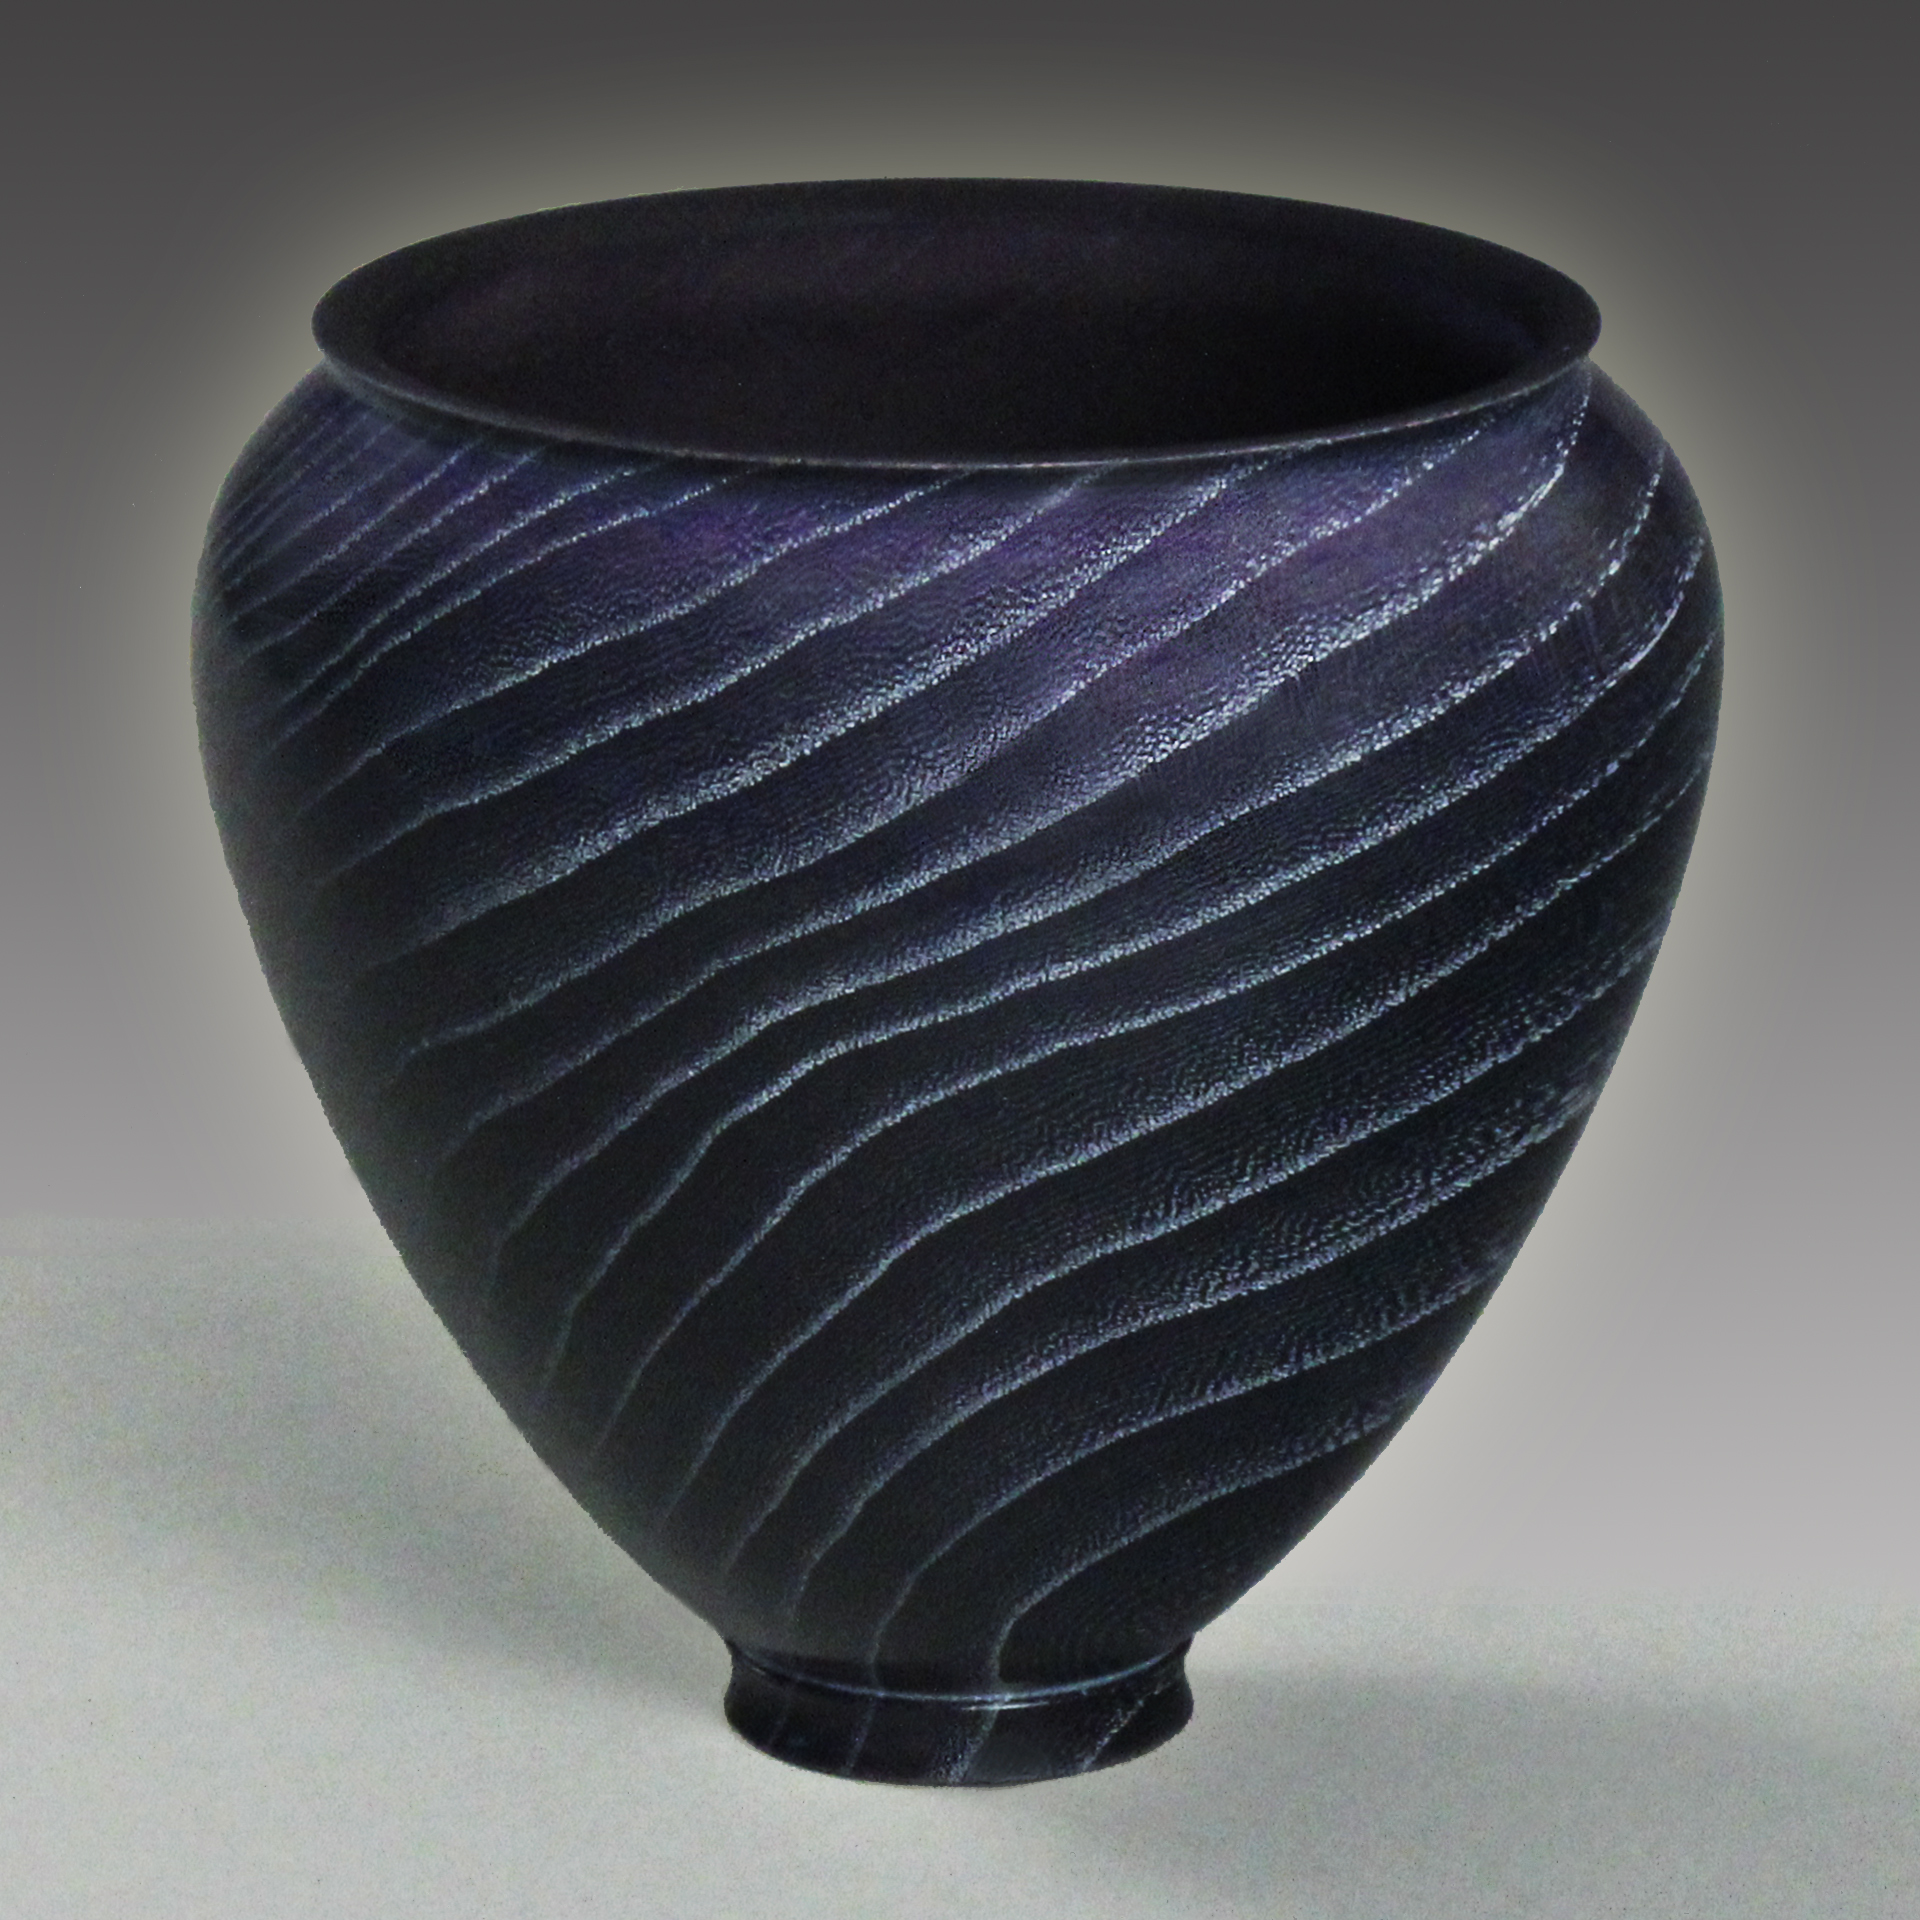 Hackberry vase dyed blue-purple